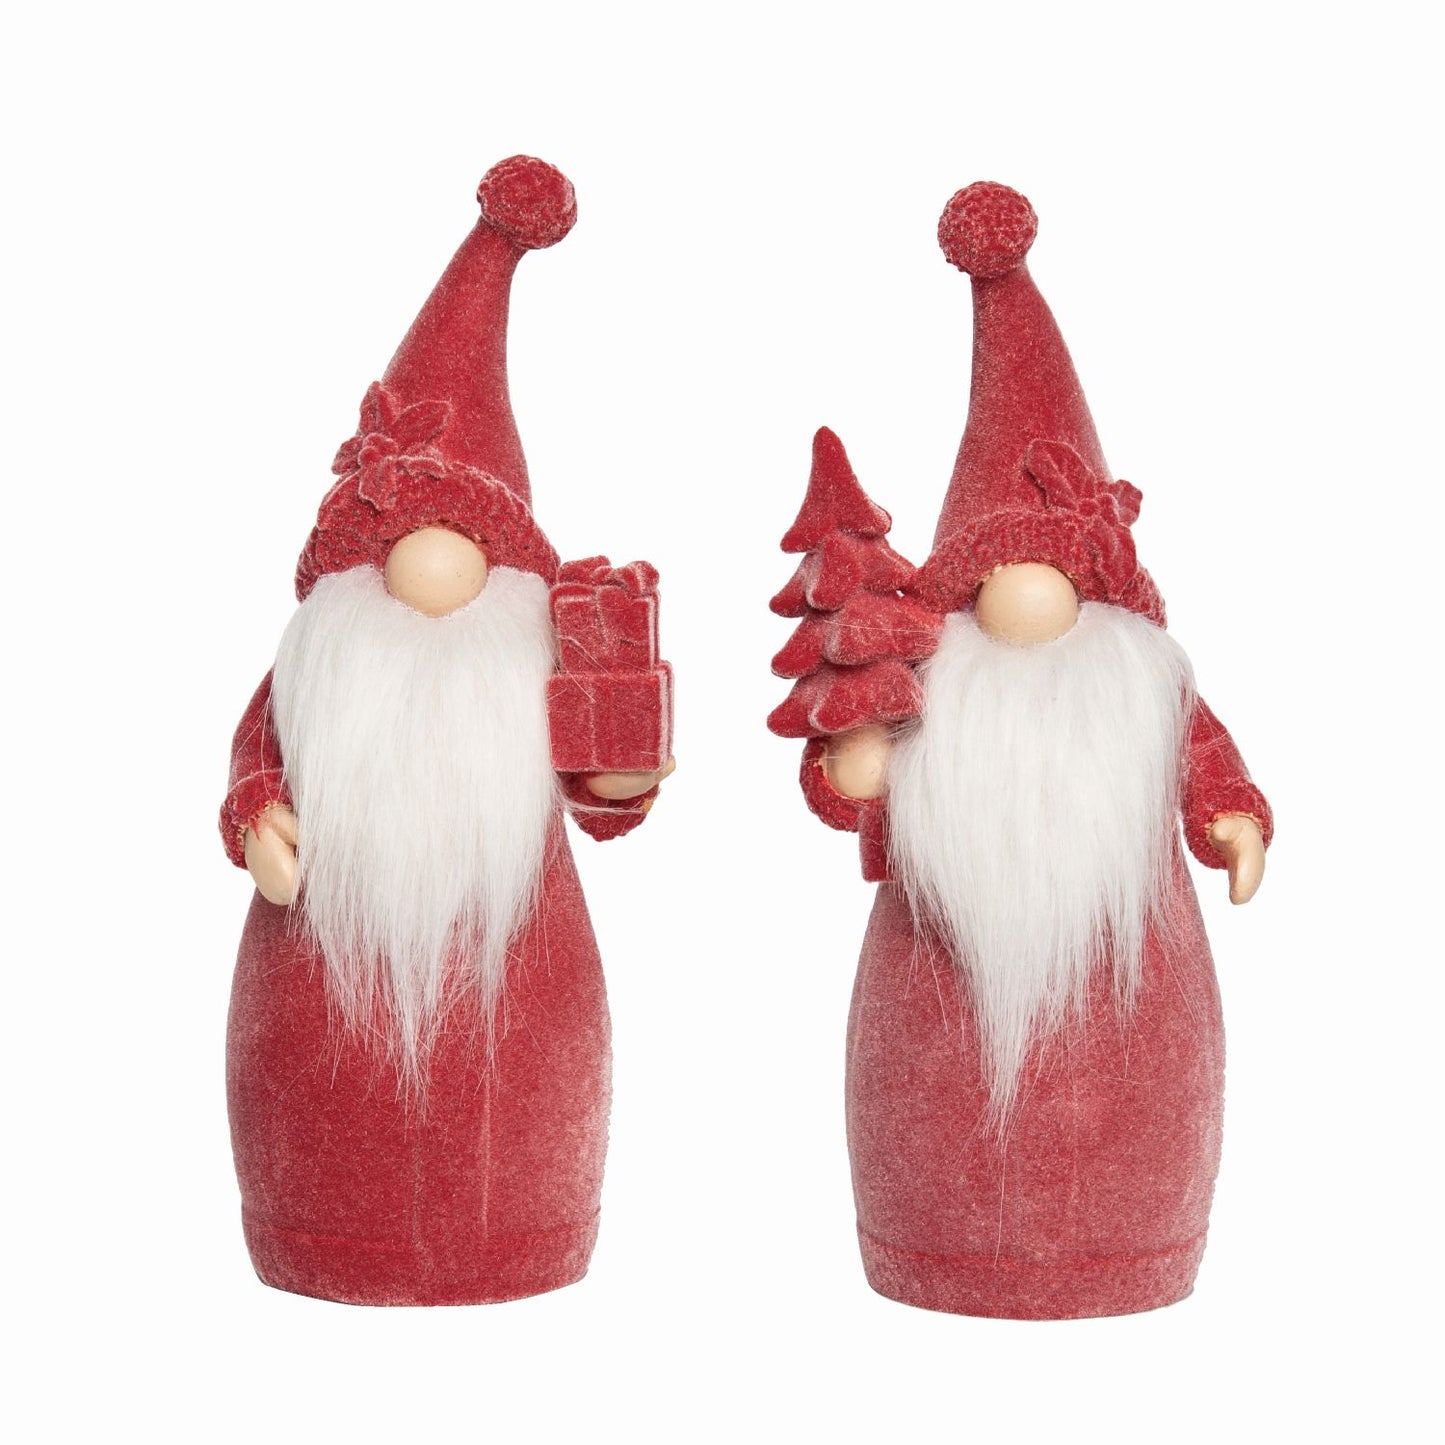 Transpac Resin Flocked Bearded Gnome Santa Figurine, Set Of 2, Assortment